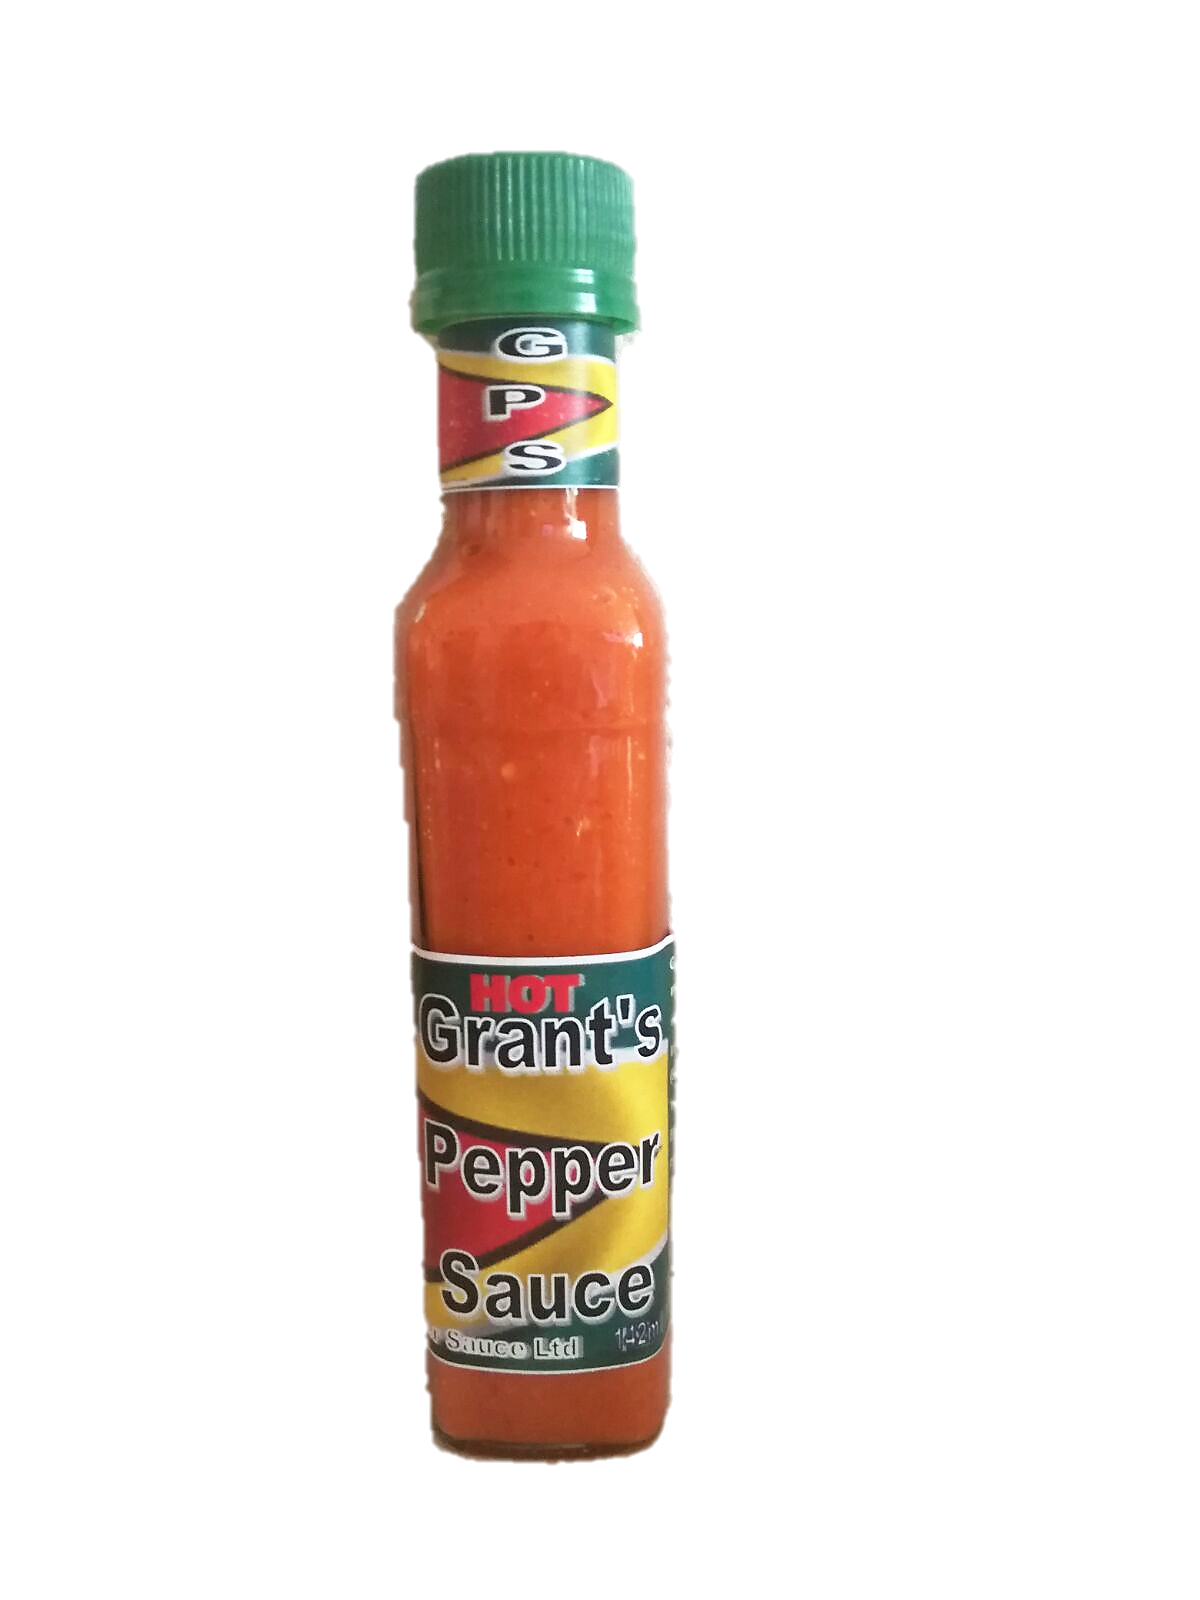 Grant's Pepper Sauce